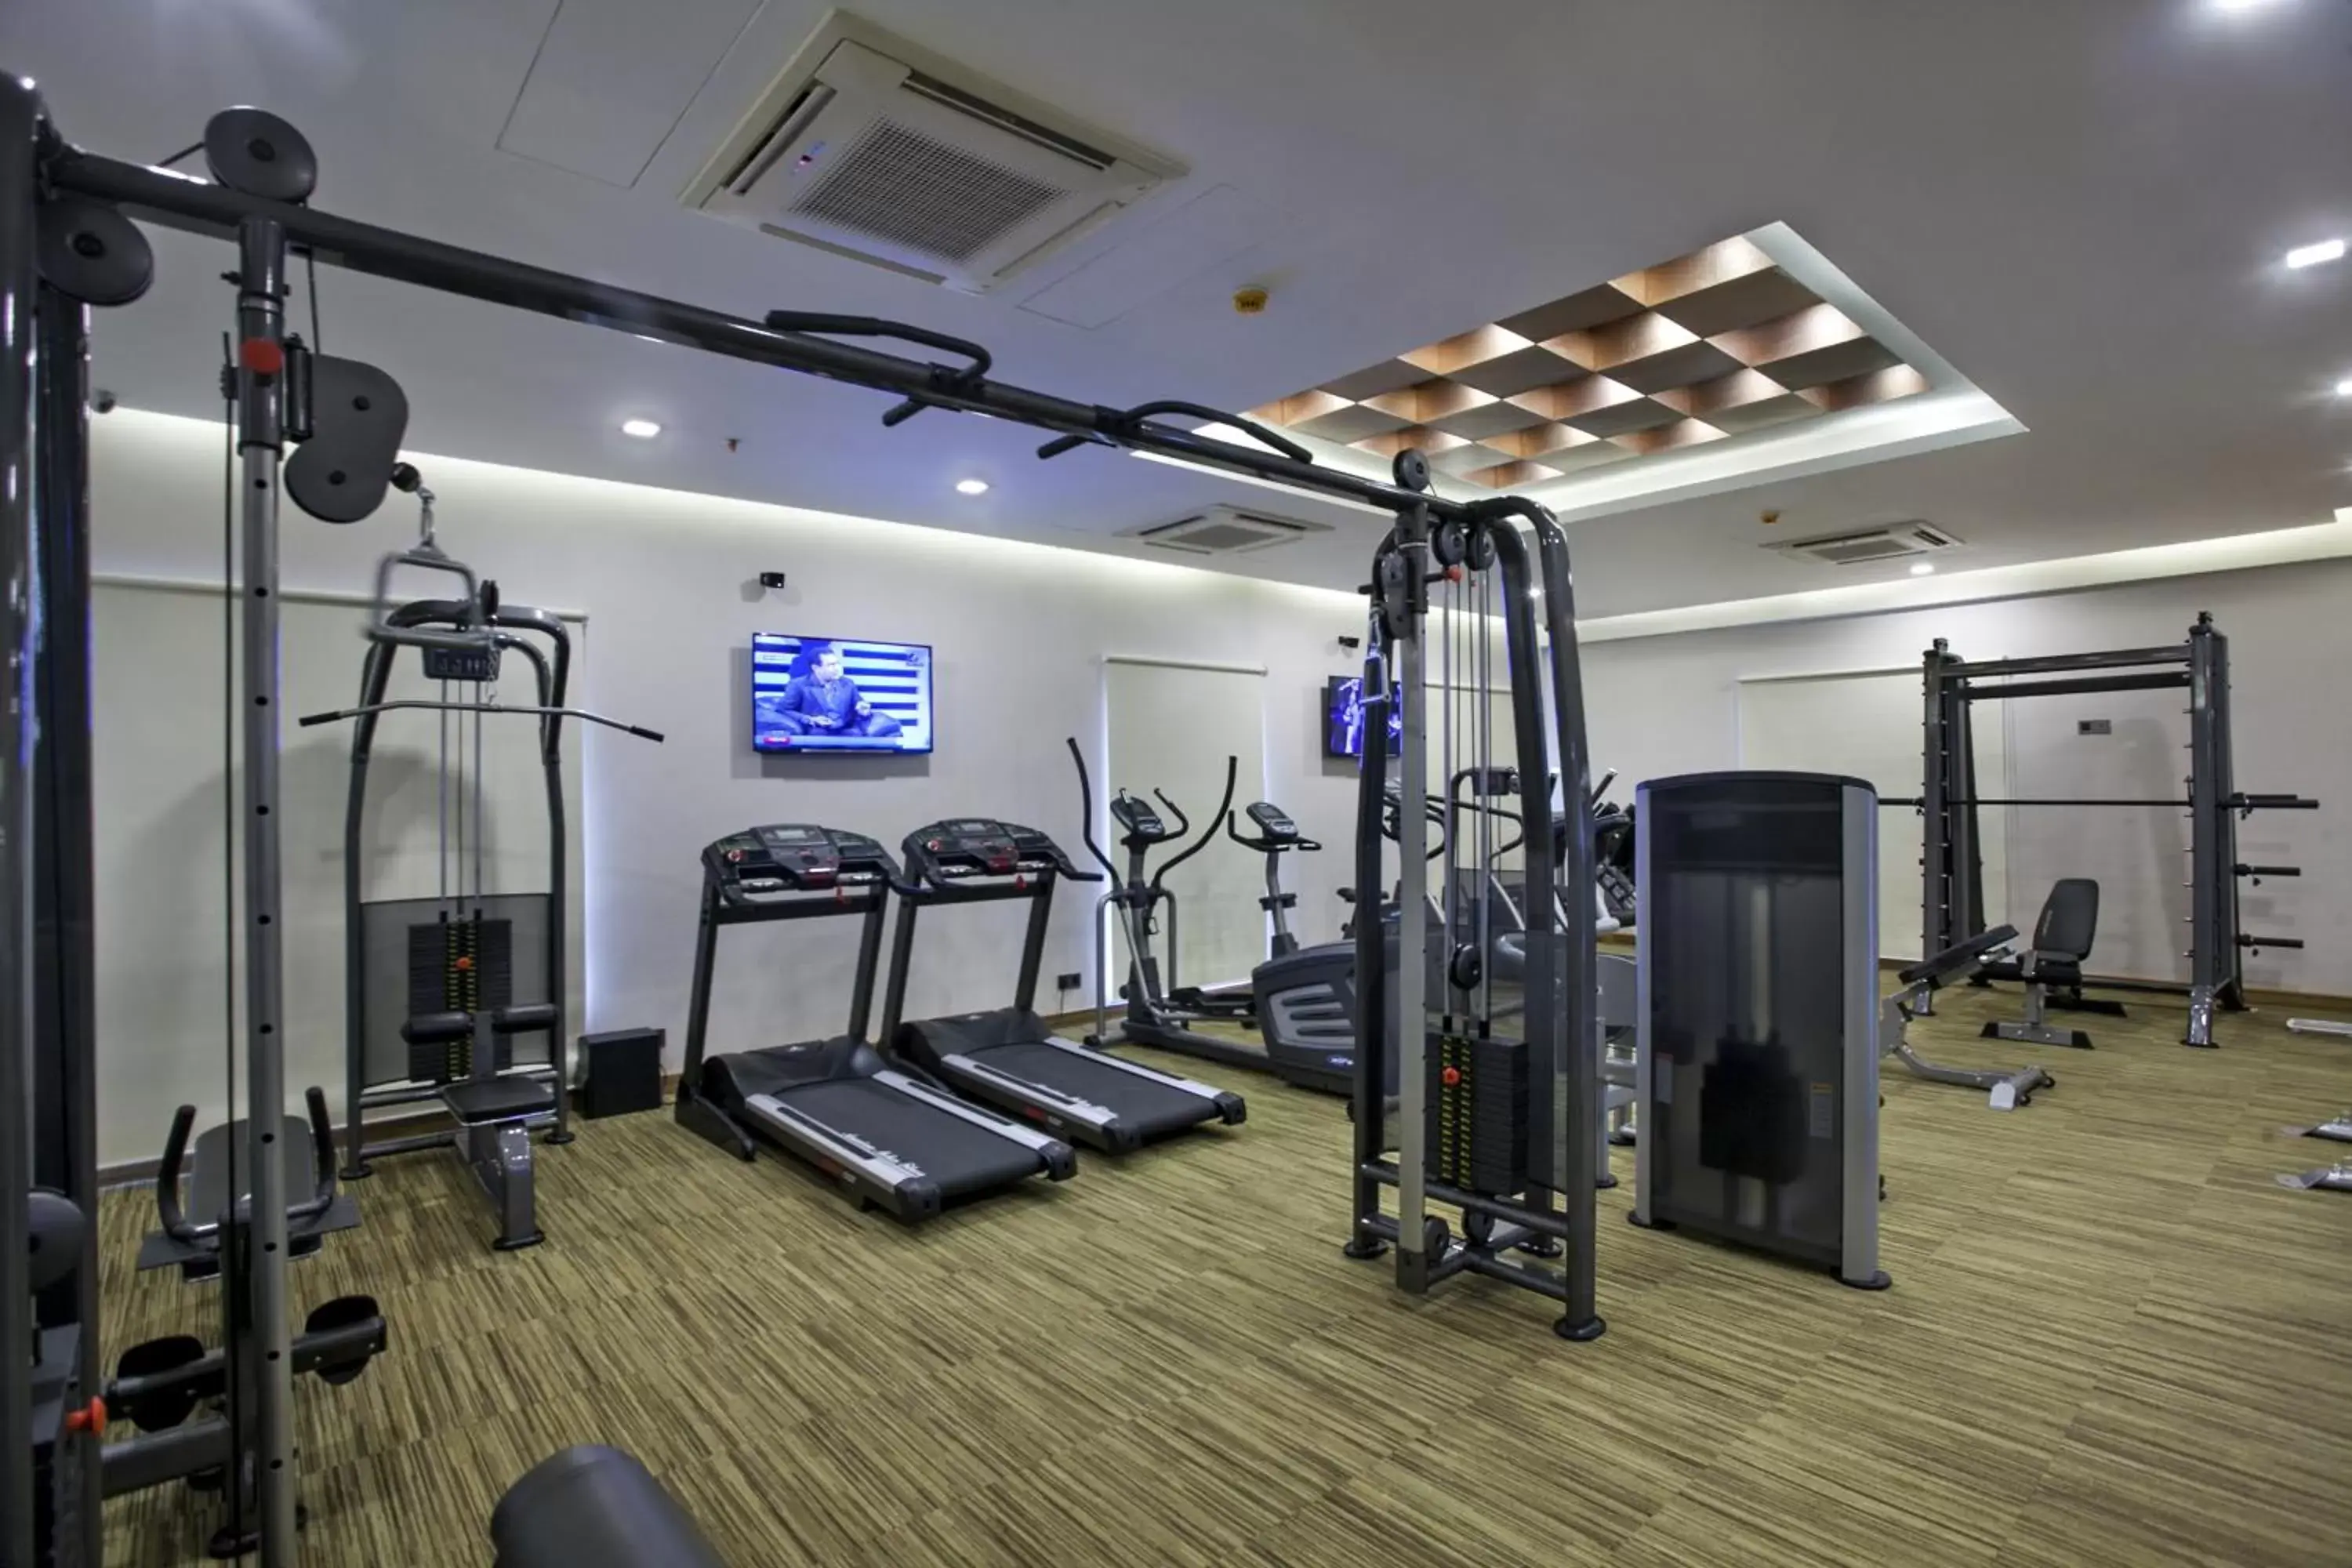 Fitness centre/facilities, Fitness Center/Facilities in Platinum Grand